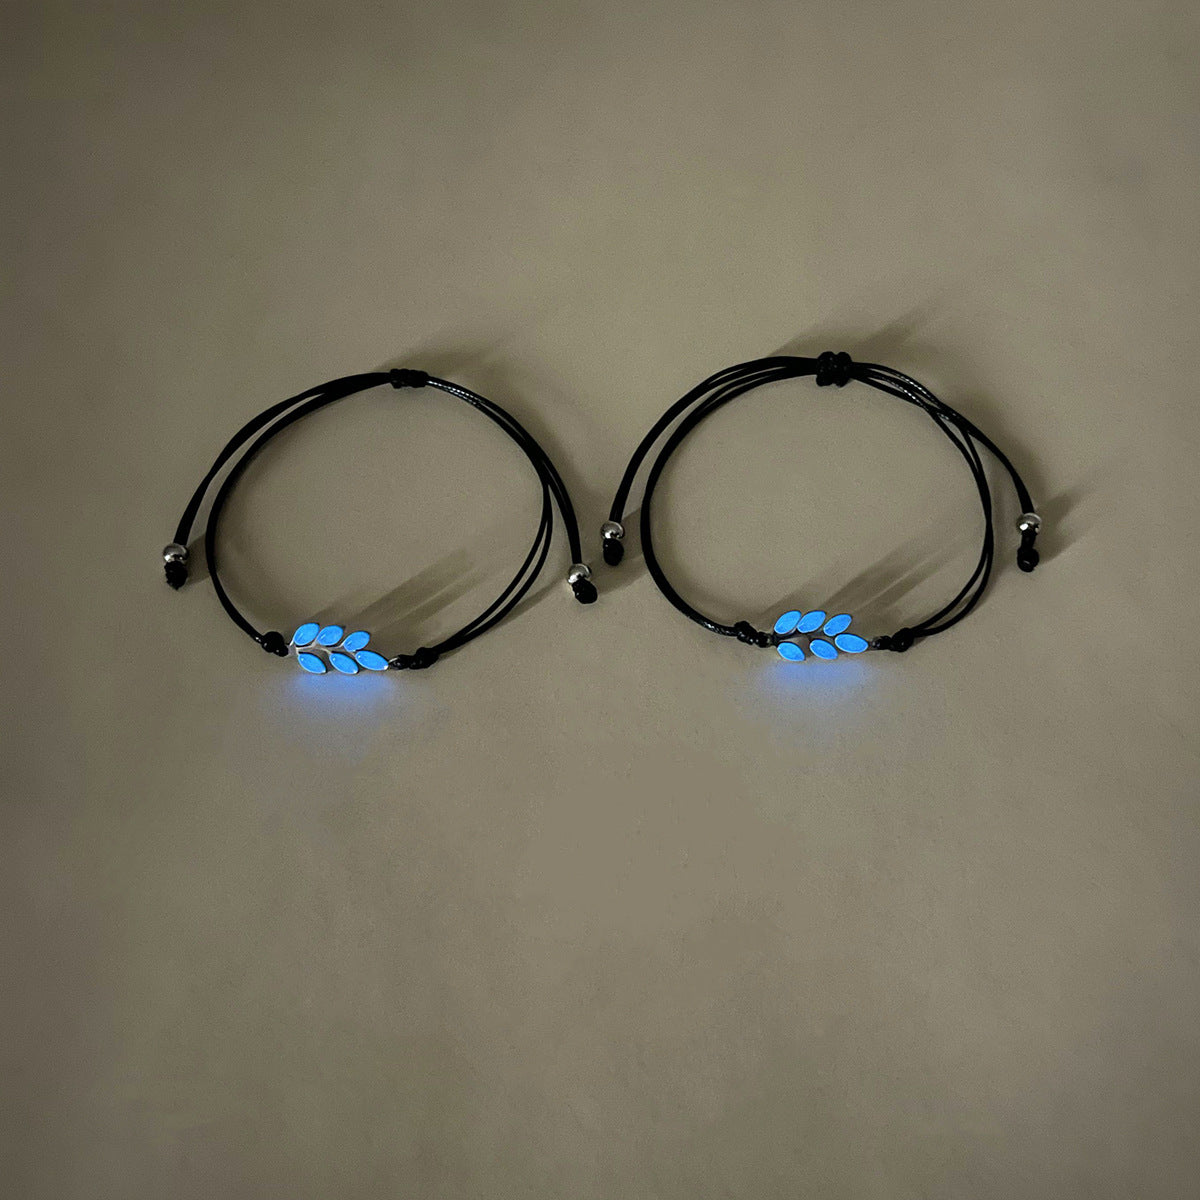 Night Glowing Friendship Bracelets Set for two